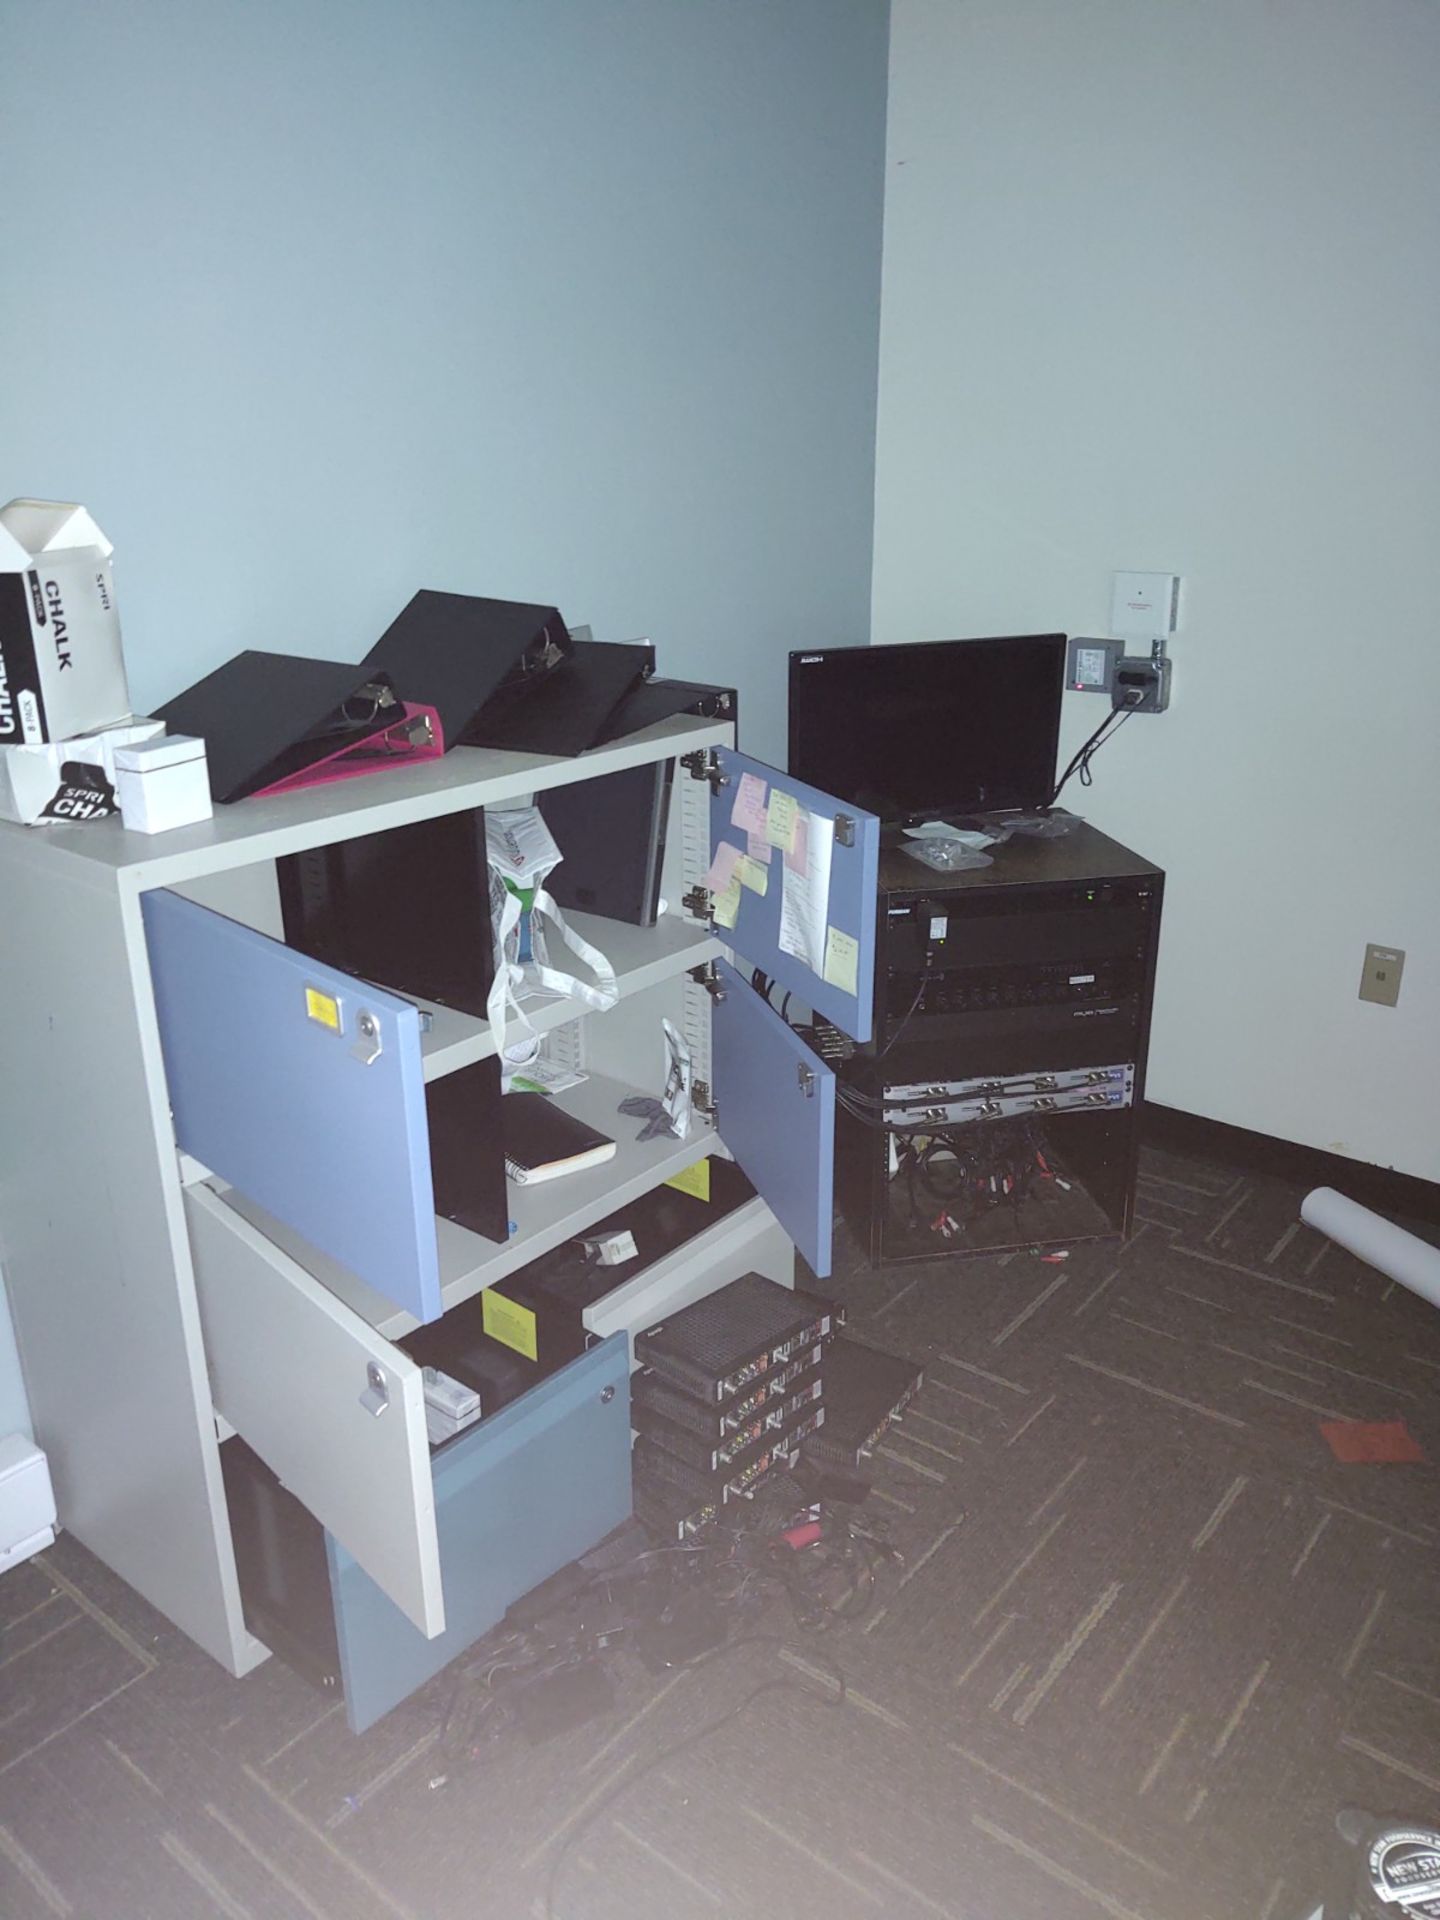 (Lot) In 1 Office C/o: (2) Desk, (1) Chairs, Storage Cabinet, Furman M-8X2, Dayton, #DA240R Amp/ - Image 3 of 3